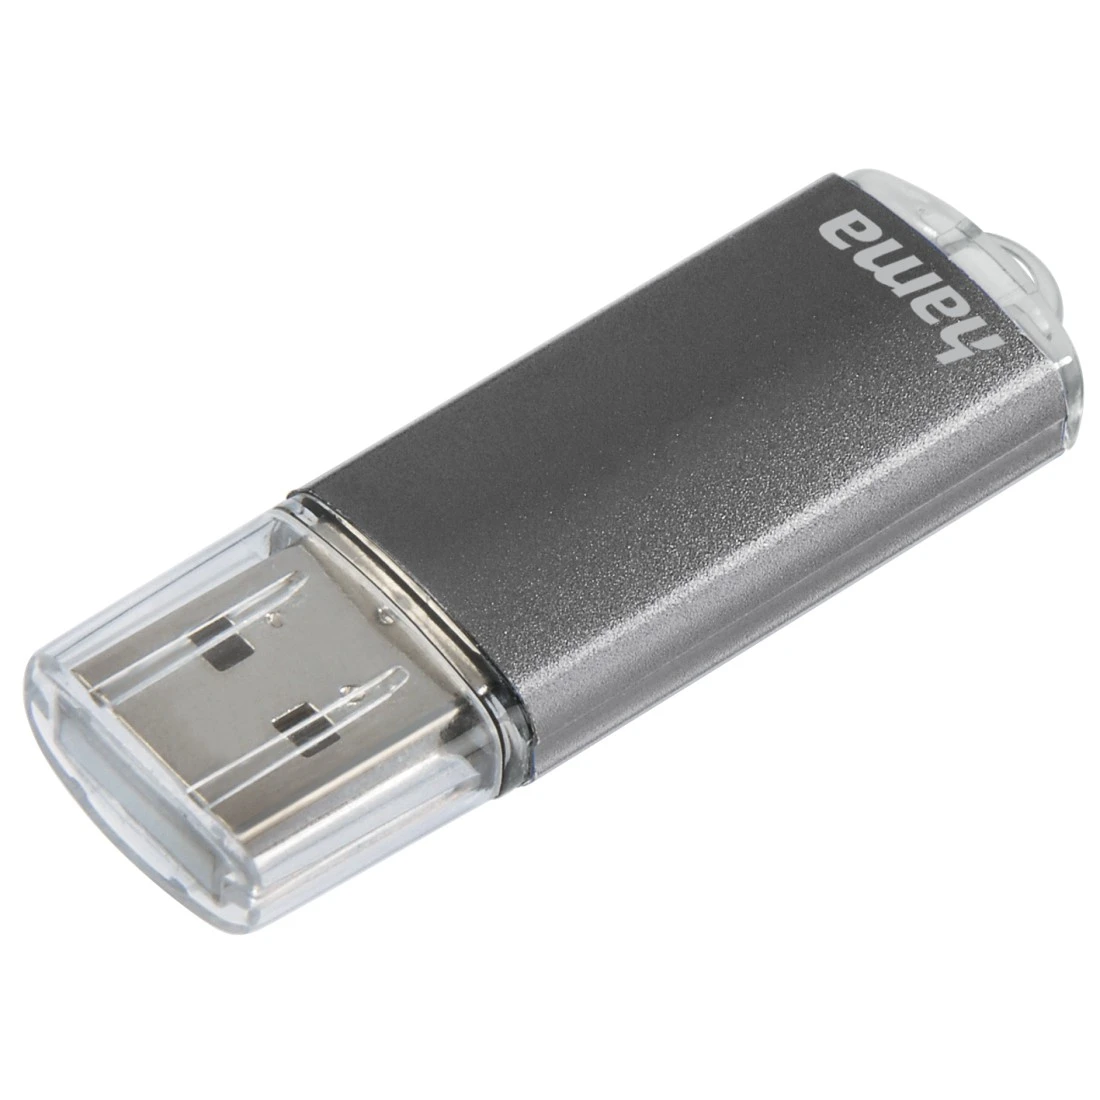 Clé USB 3.0 Laeta - 64 GB - marron